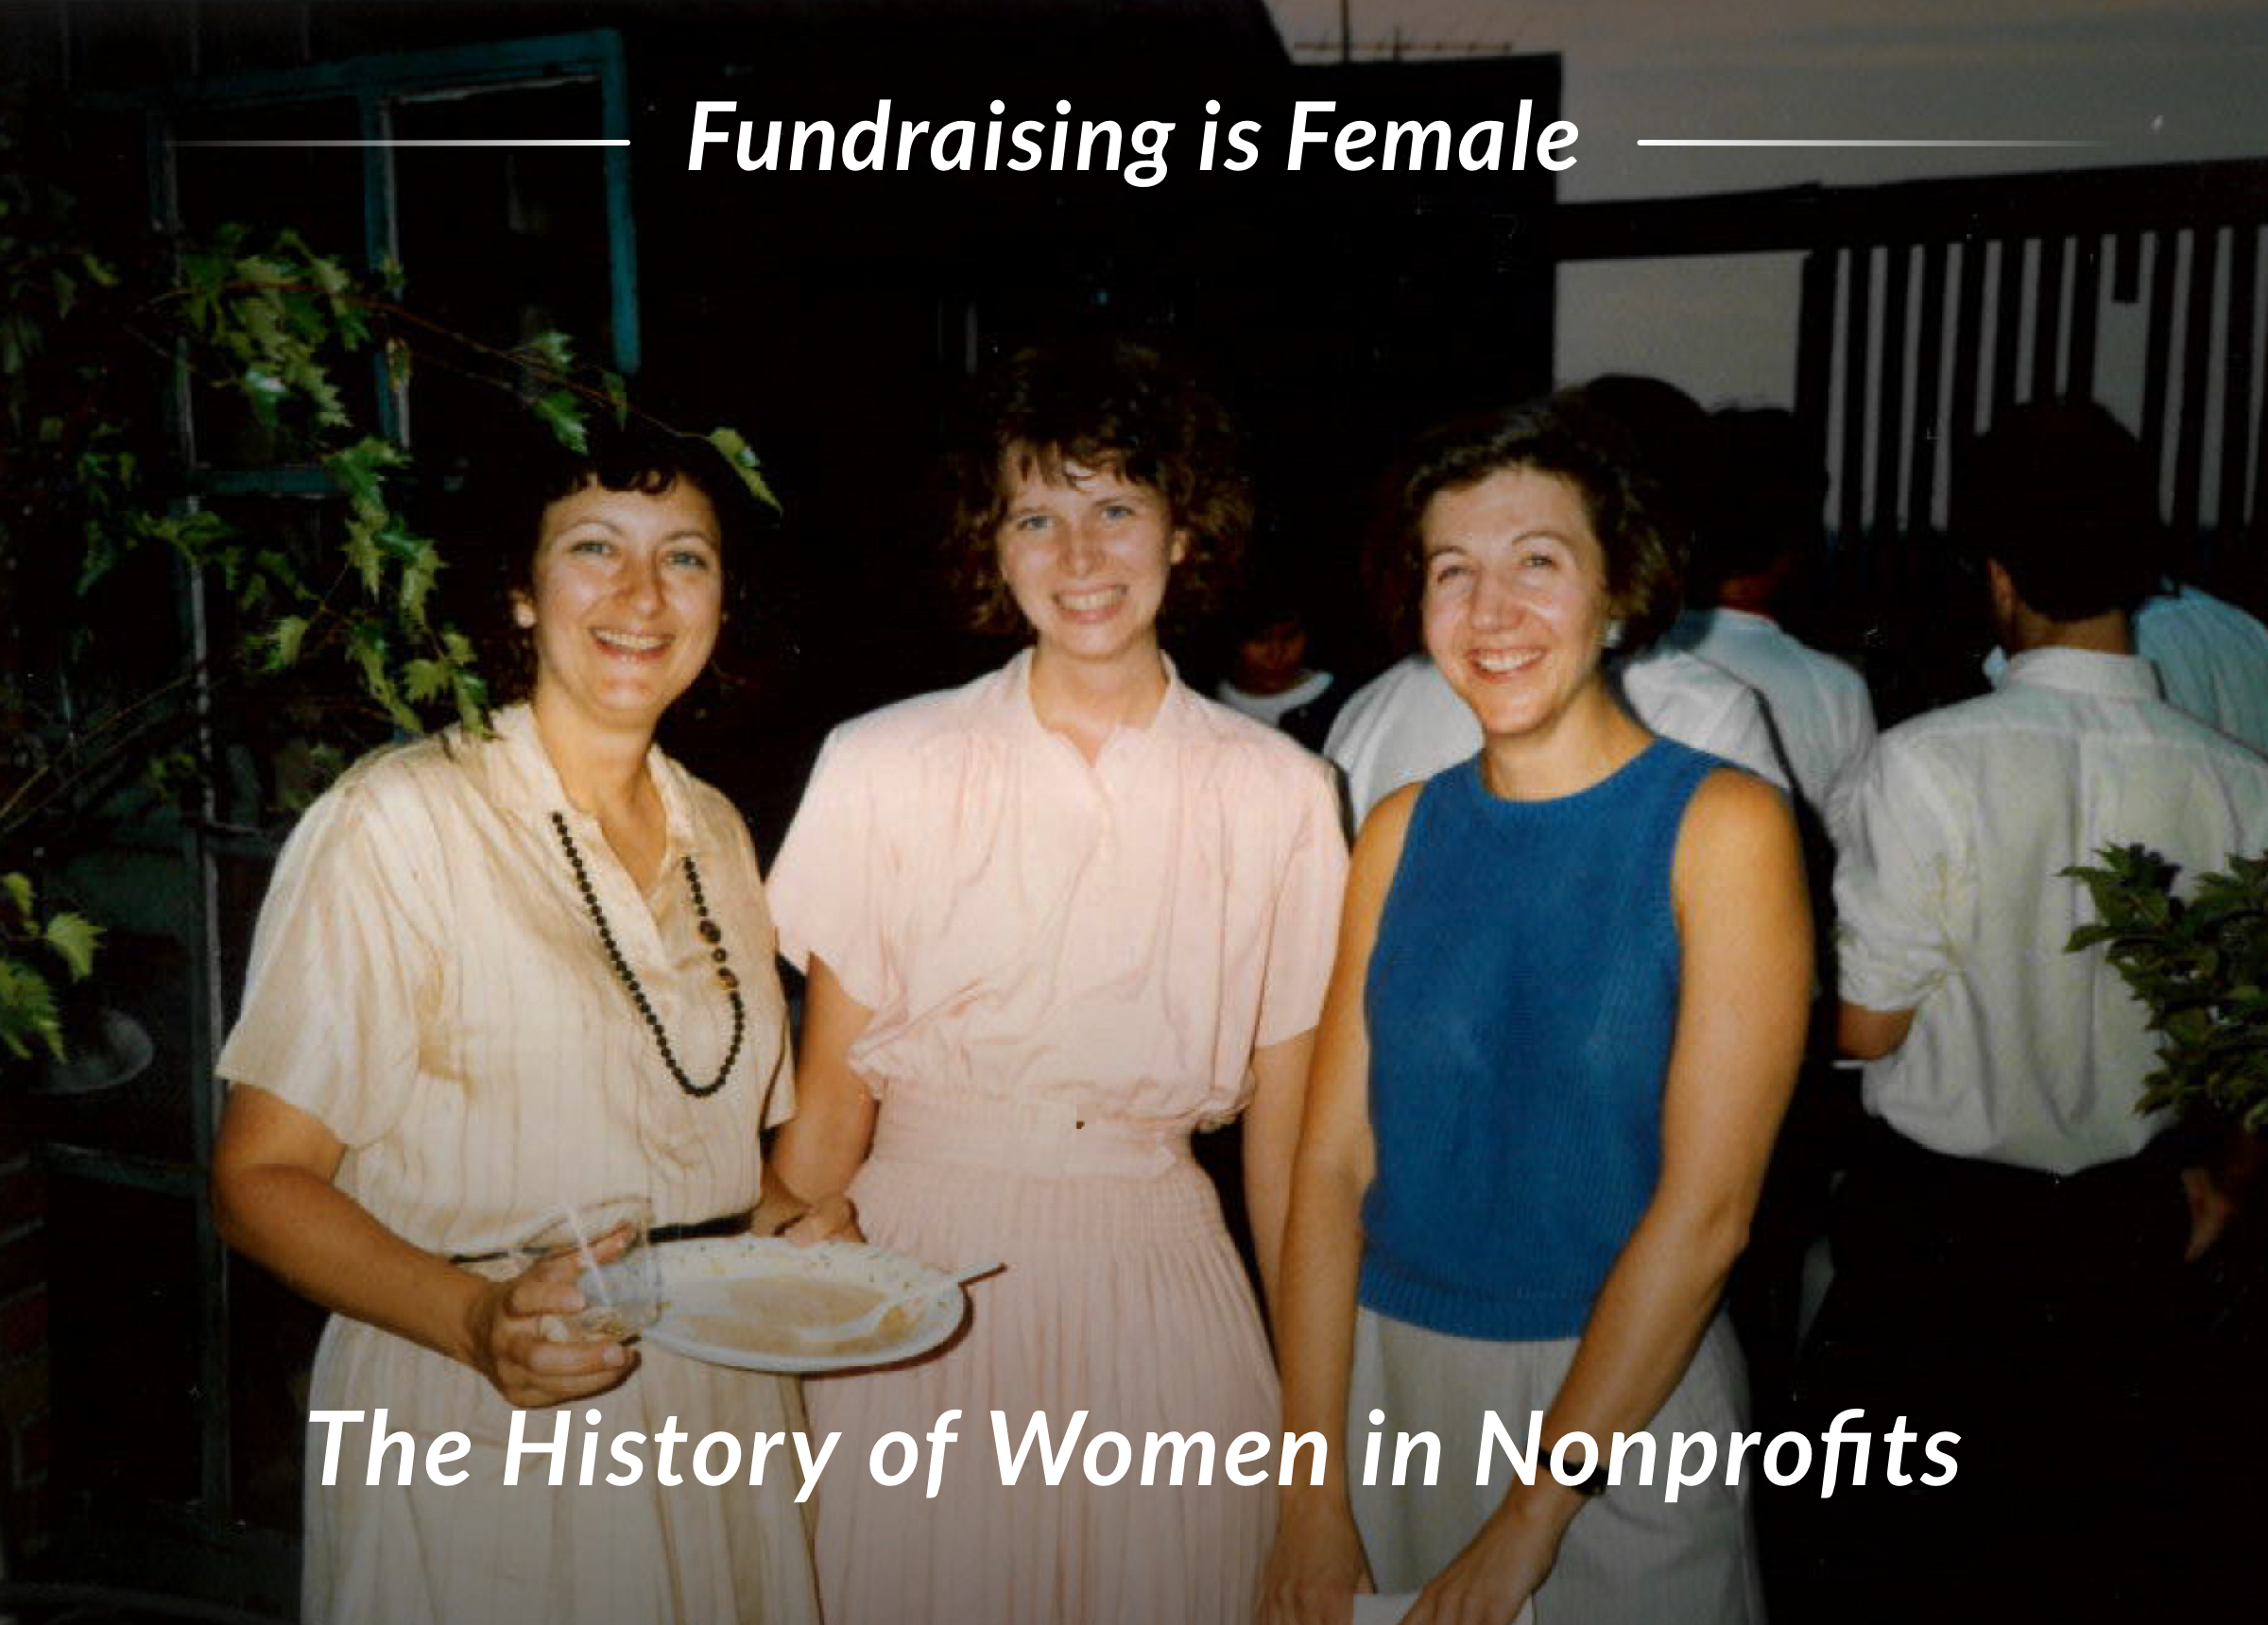 Fundraising is female: 3 female fundraisers